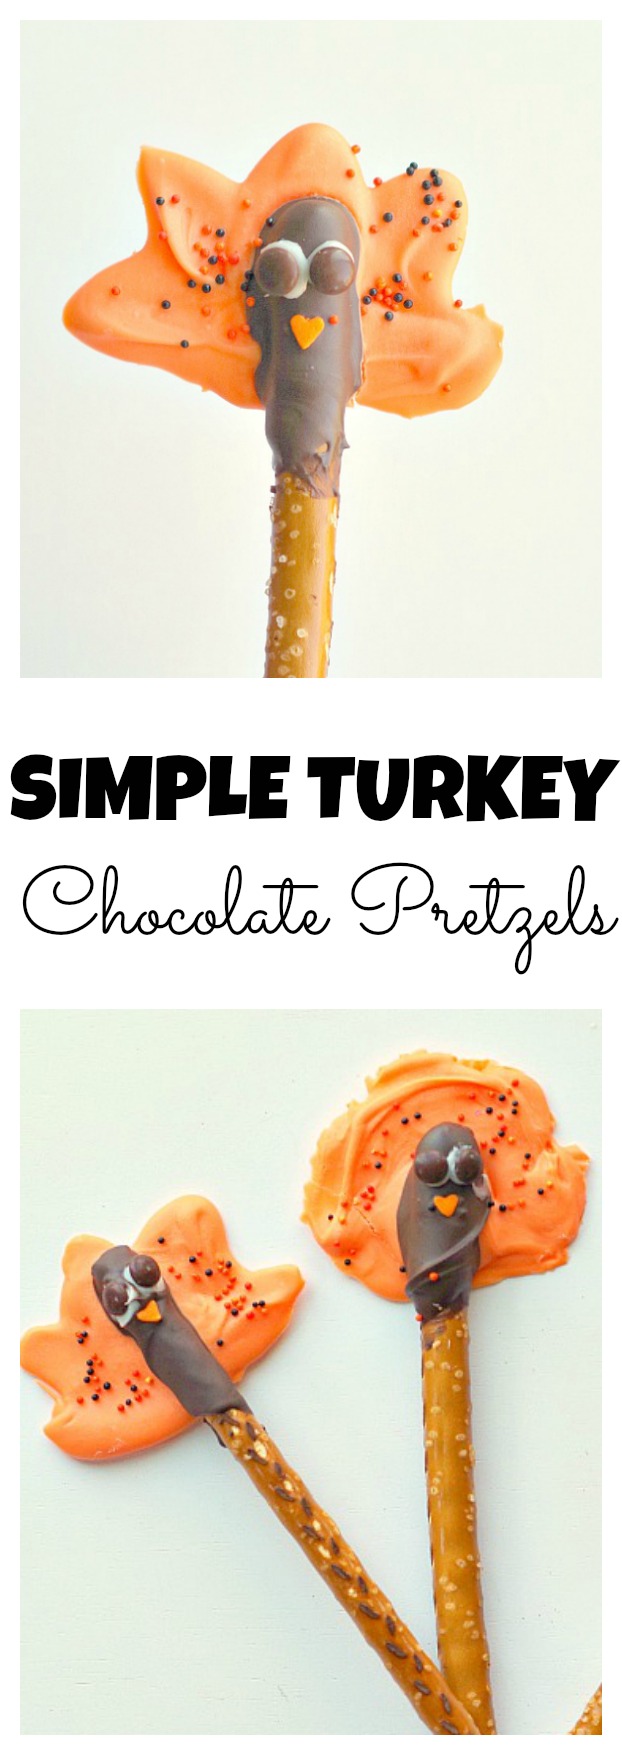 Simple Turkey Chocolate Pretzels